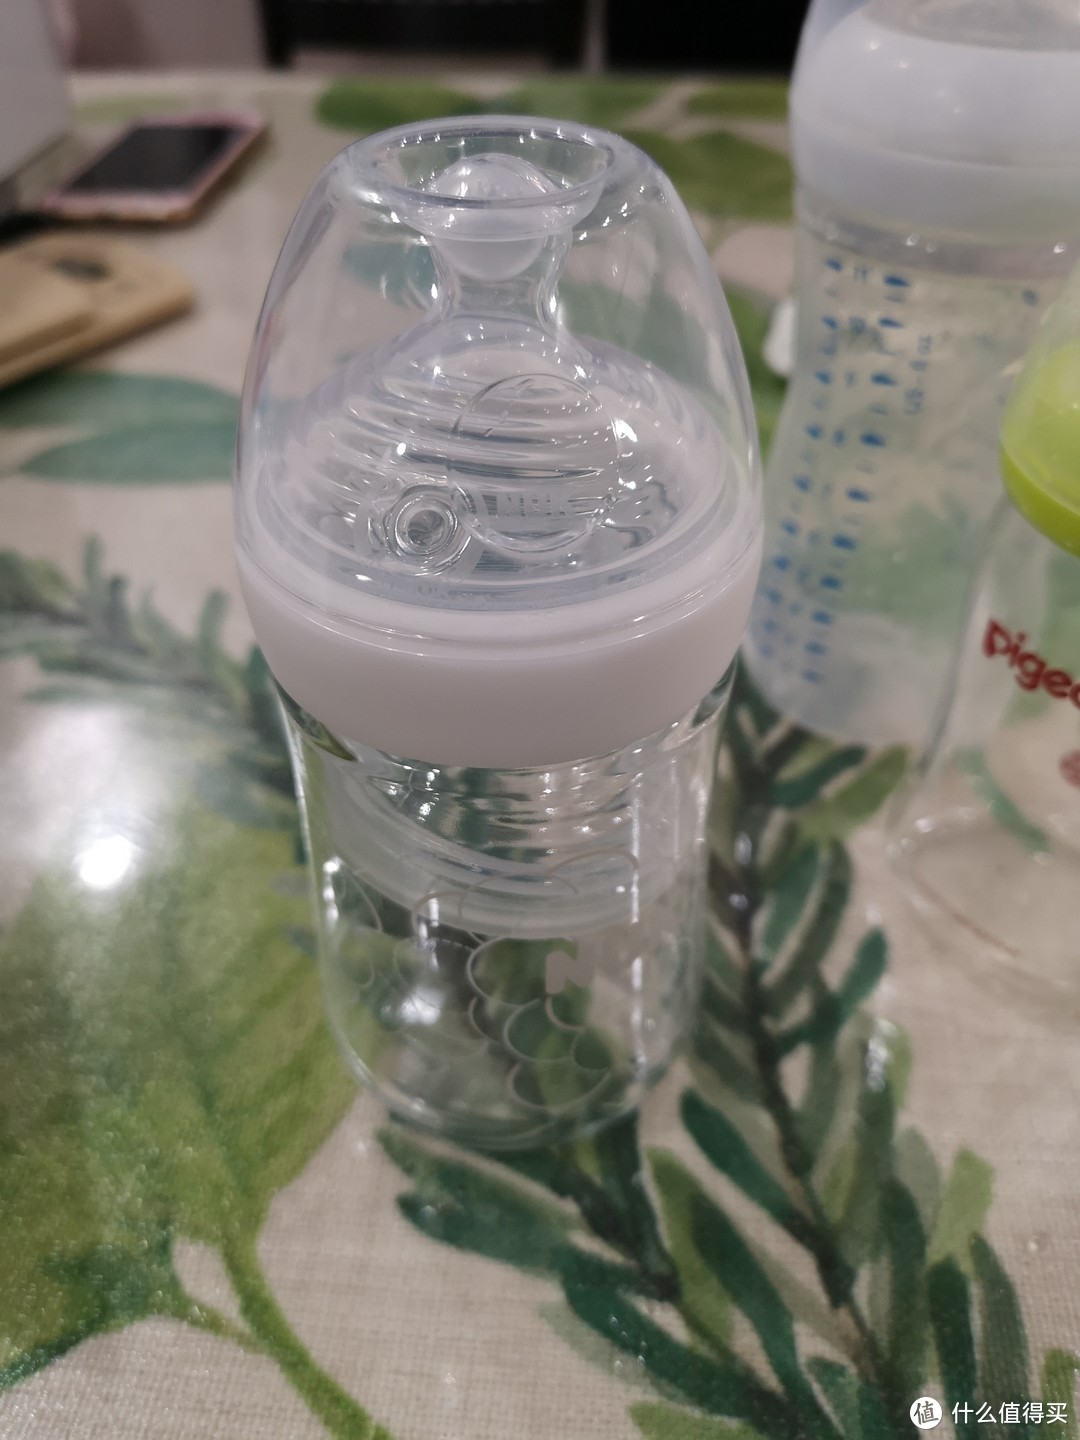 NUK Nature Sense 玻璃奶瓶套装初体验